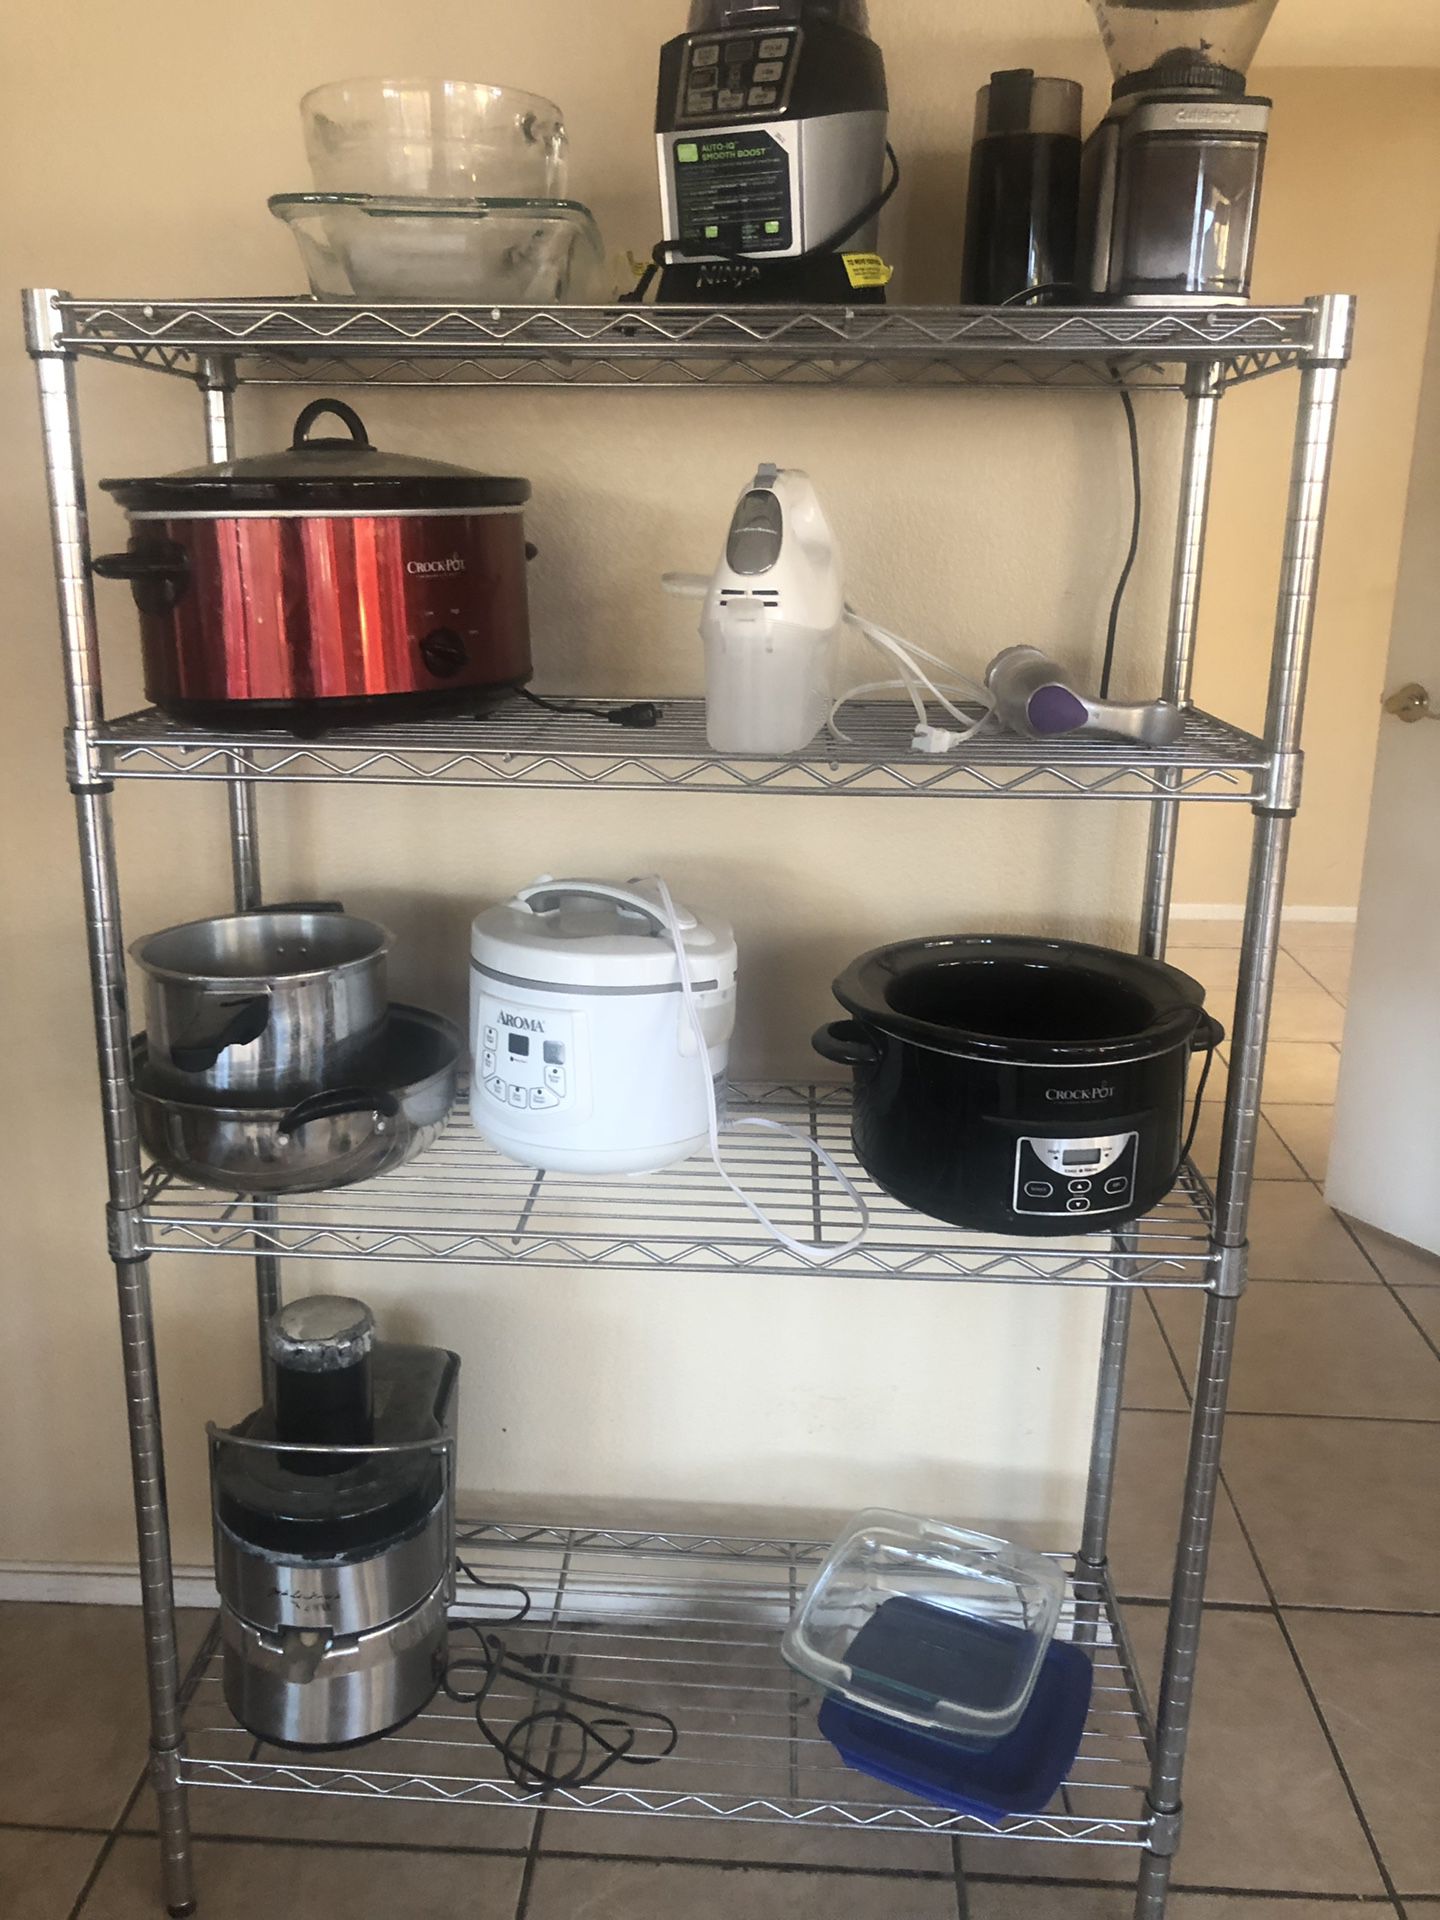 Kitchen appliances and metal kitchen rack